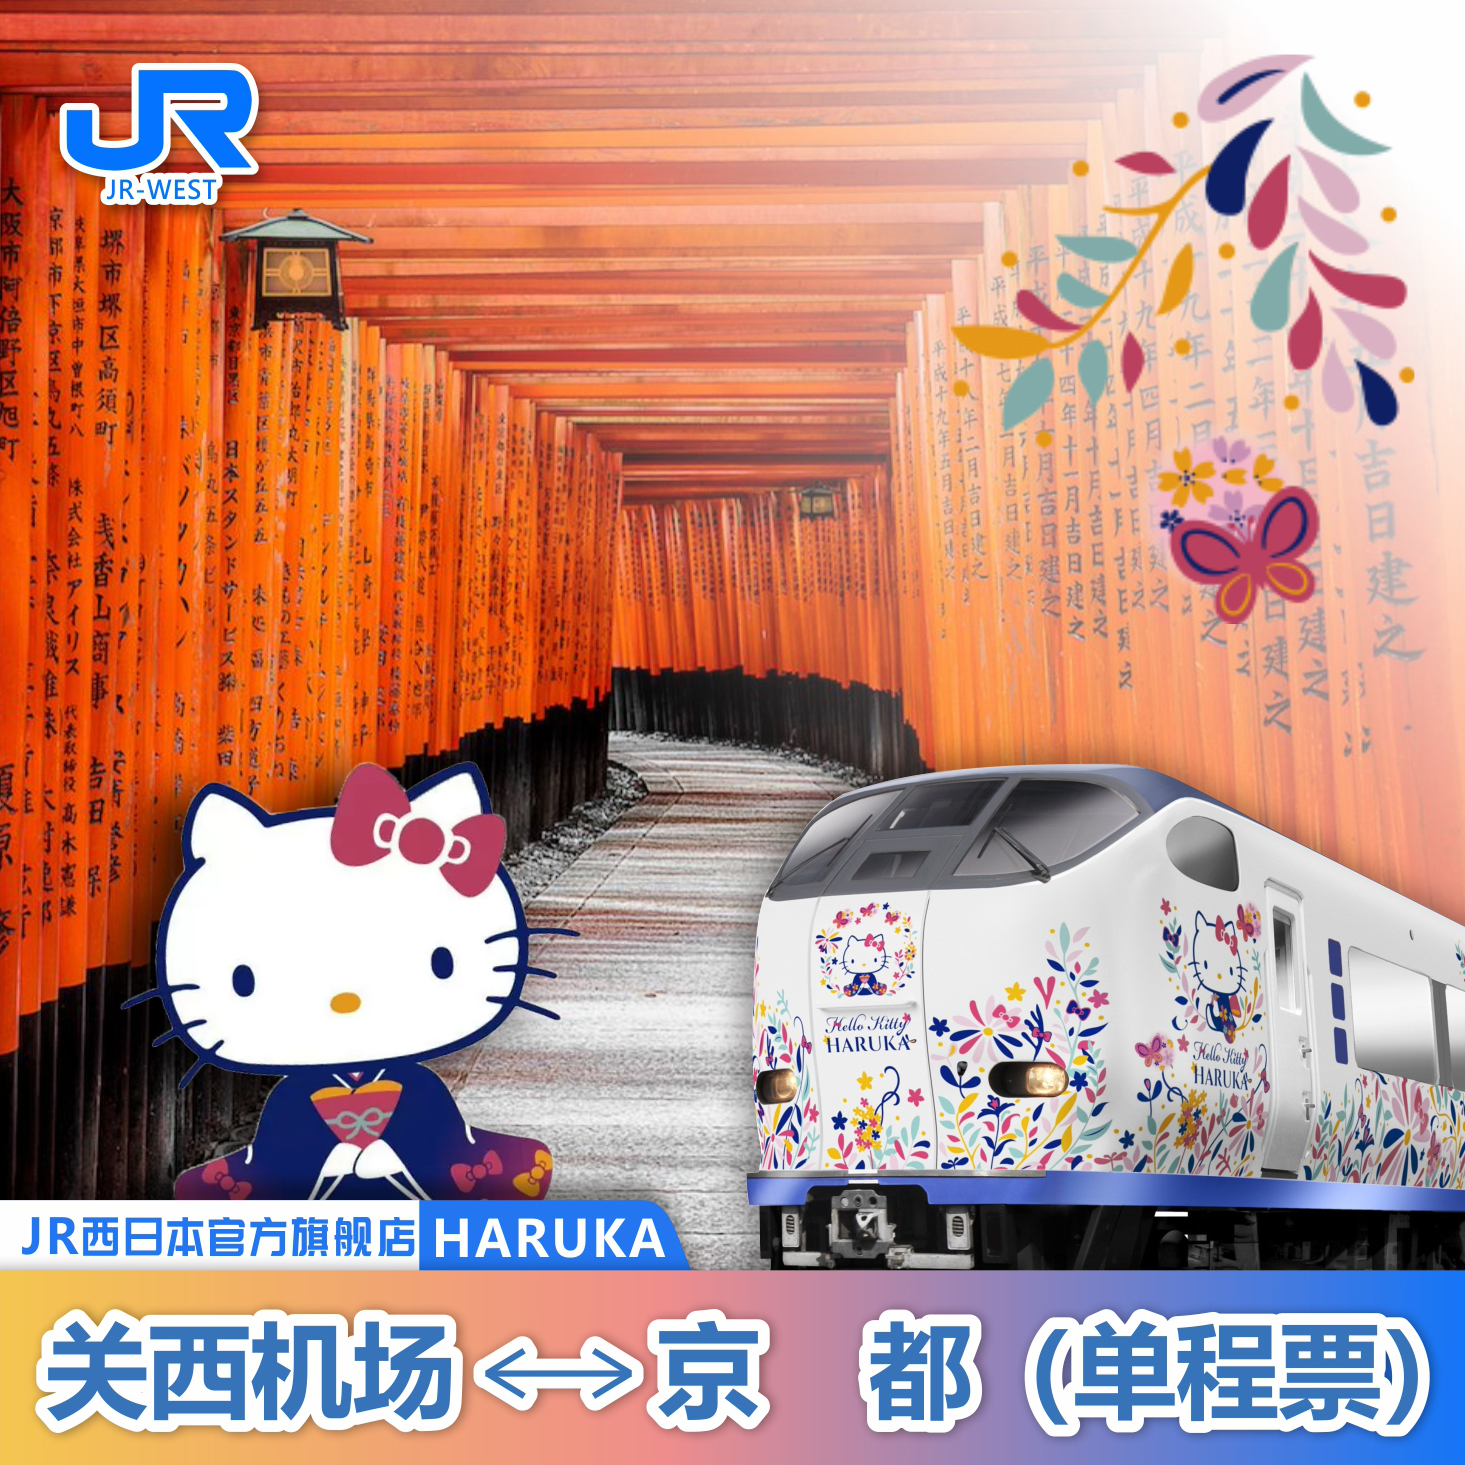 HARUKA日本关西机场京都大阪单程票 电子票 官方旗舰店JRPASS